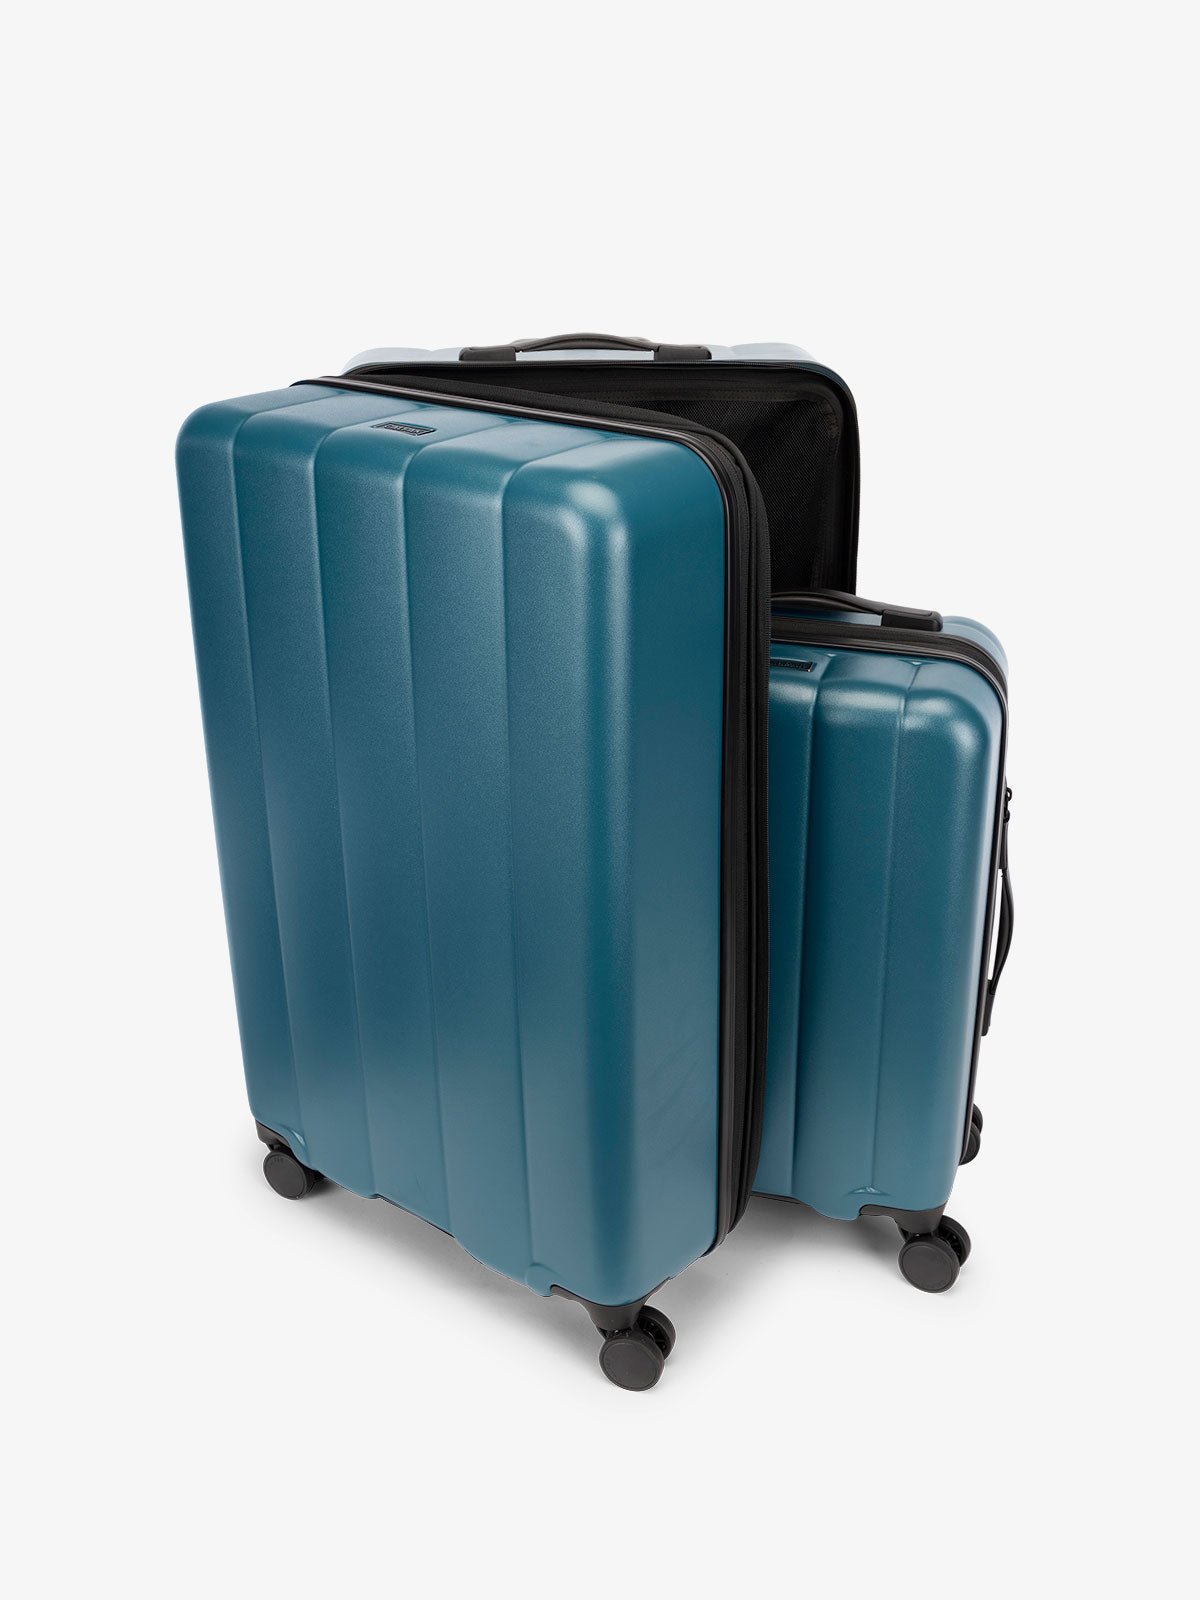 CALPAK Starter Bundle 2 piece hard side luggage set with 360 spinner wheels in blue